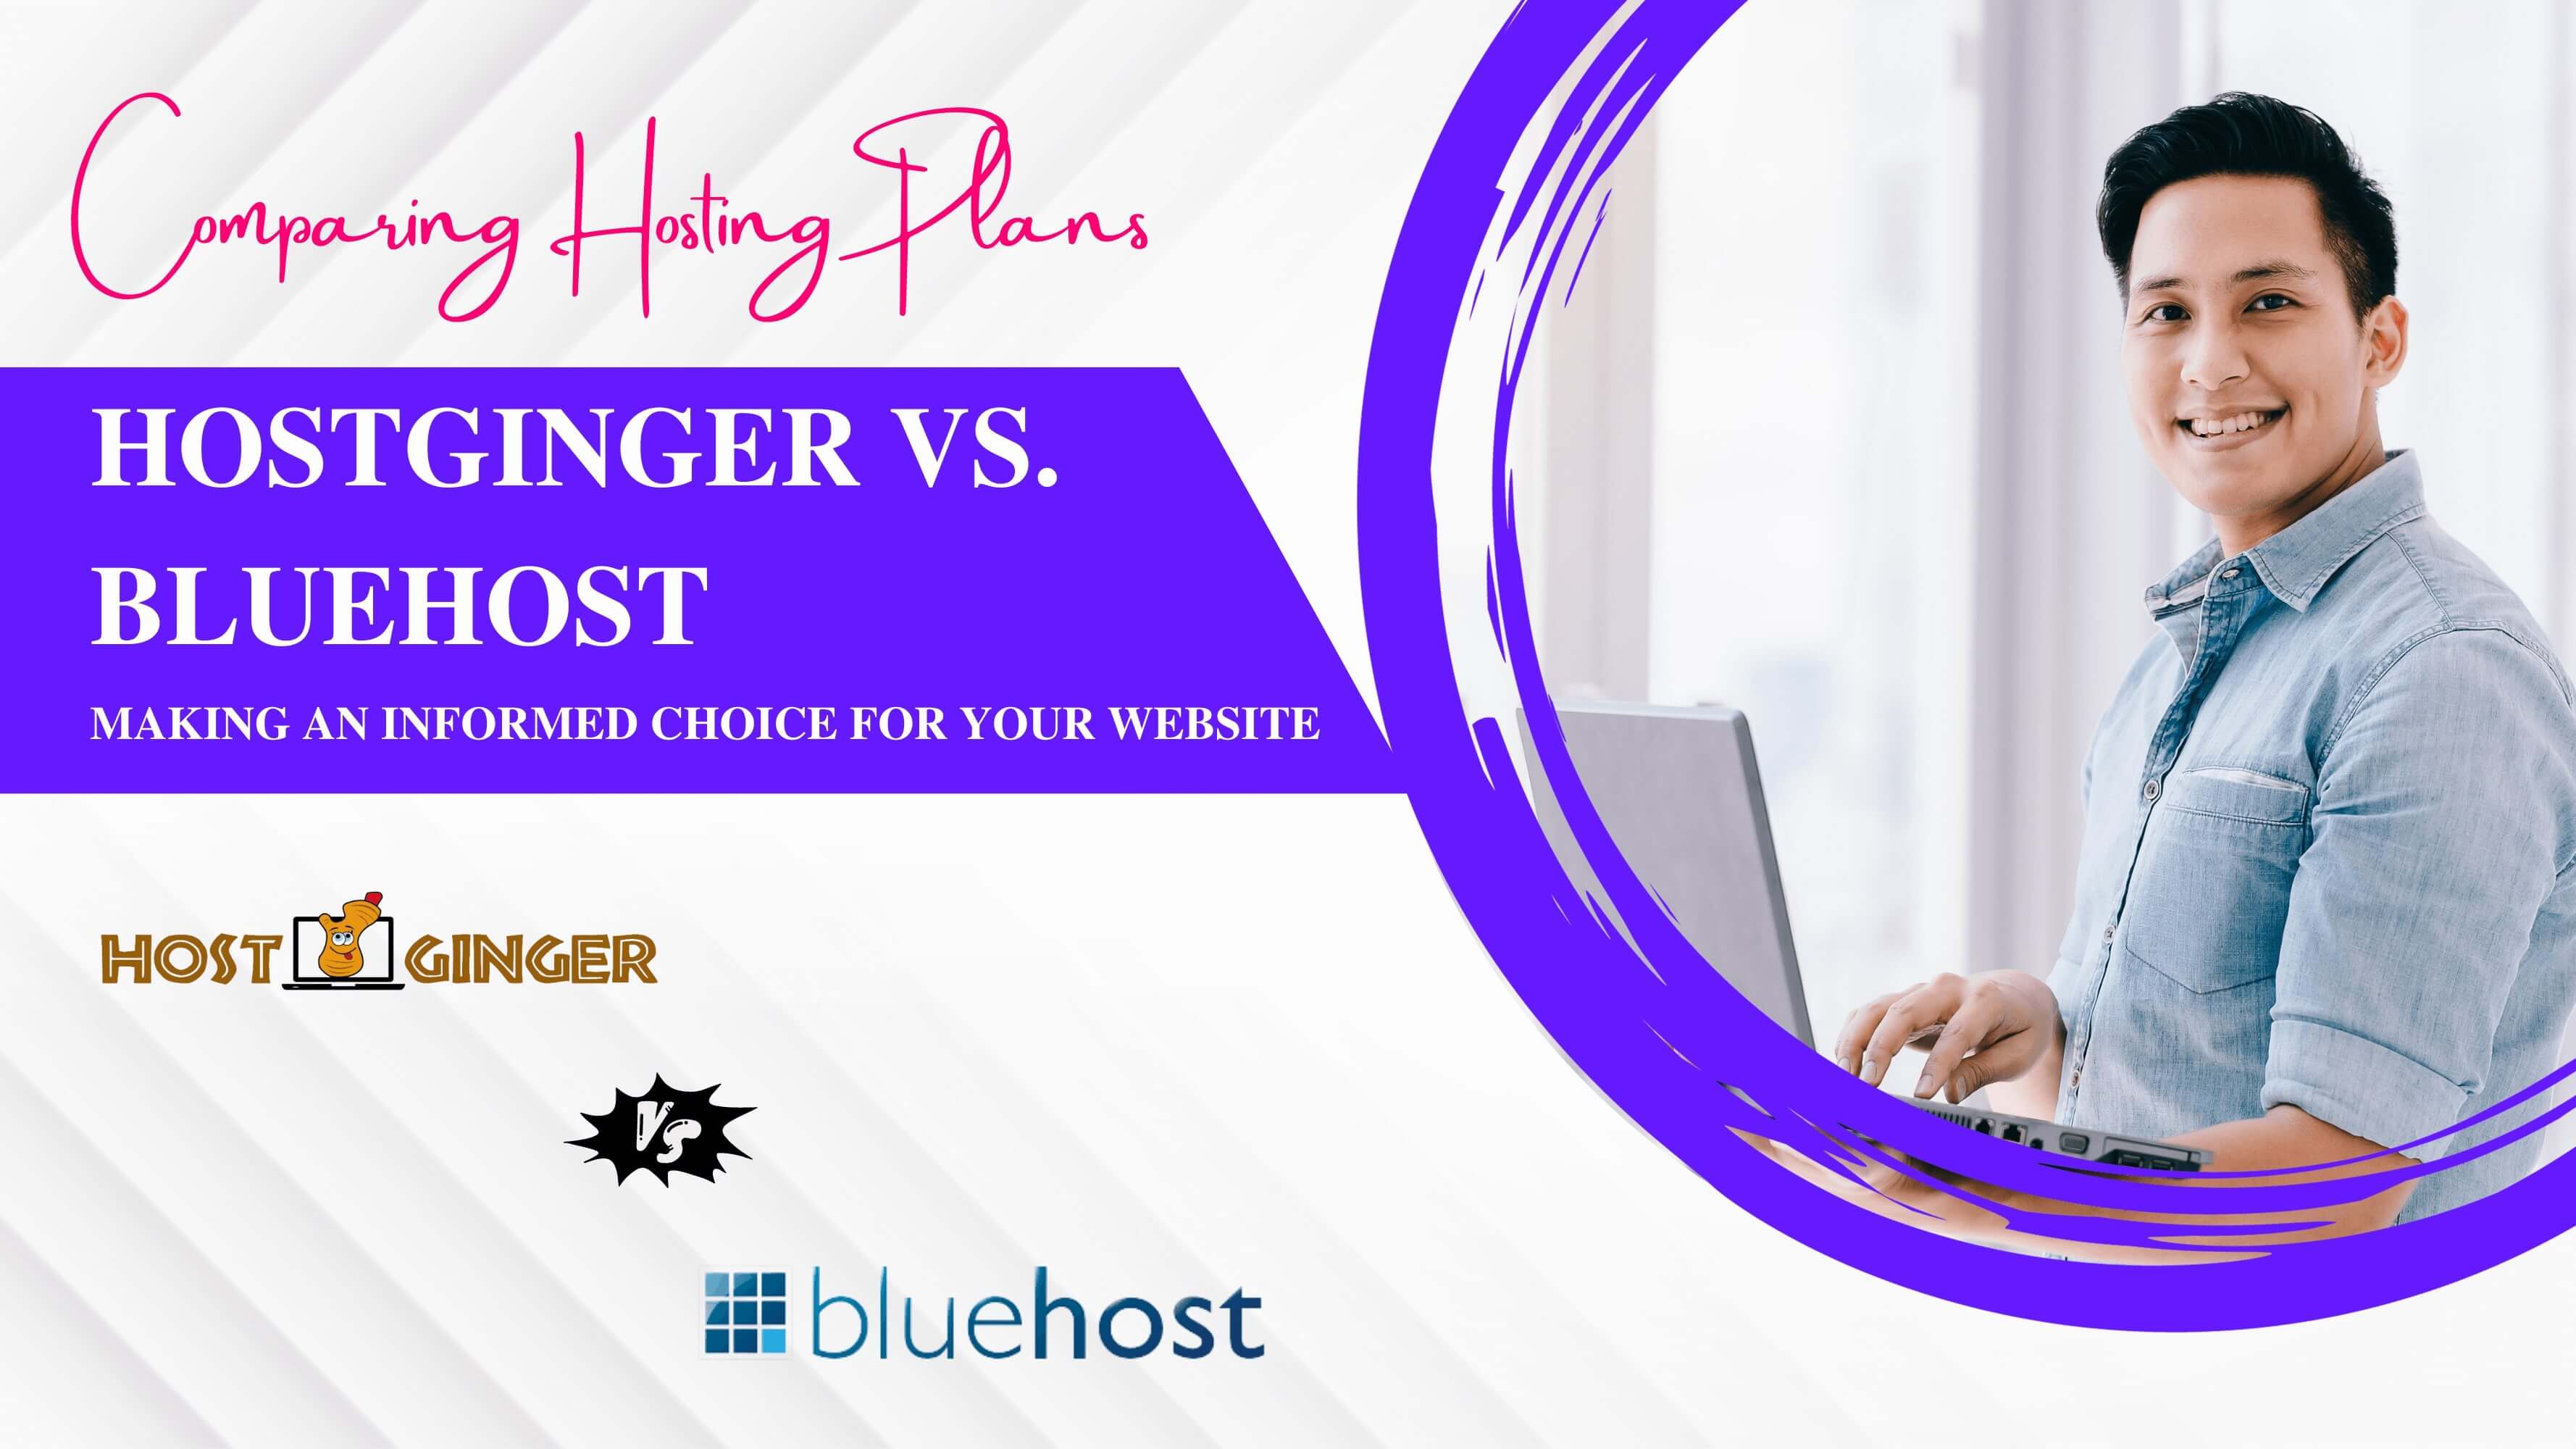 Comparing Hosting Plans: Hostginger vs. Bluehost